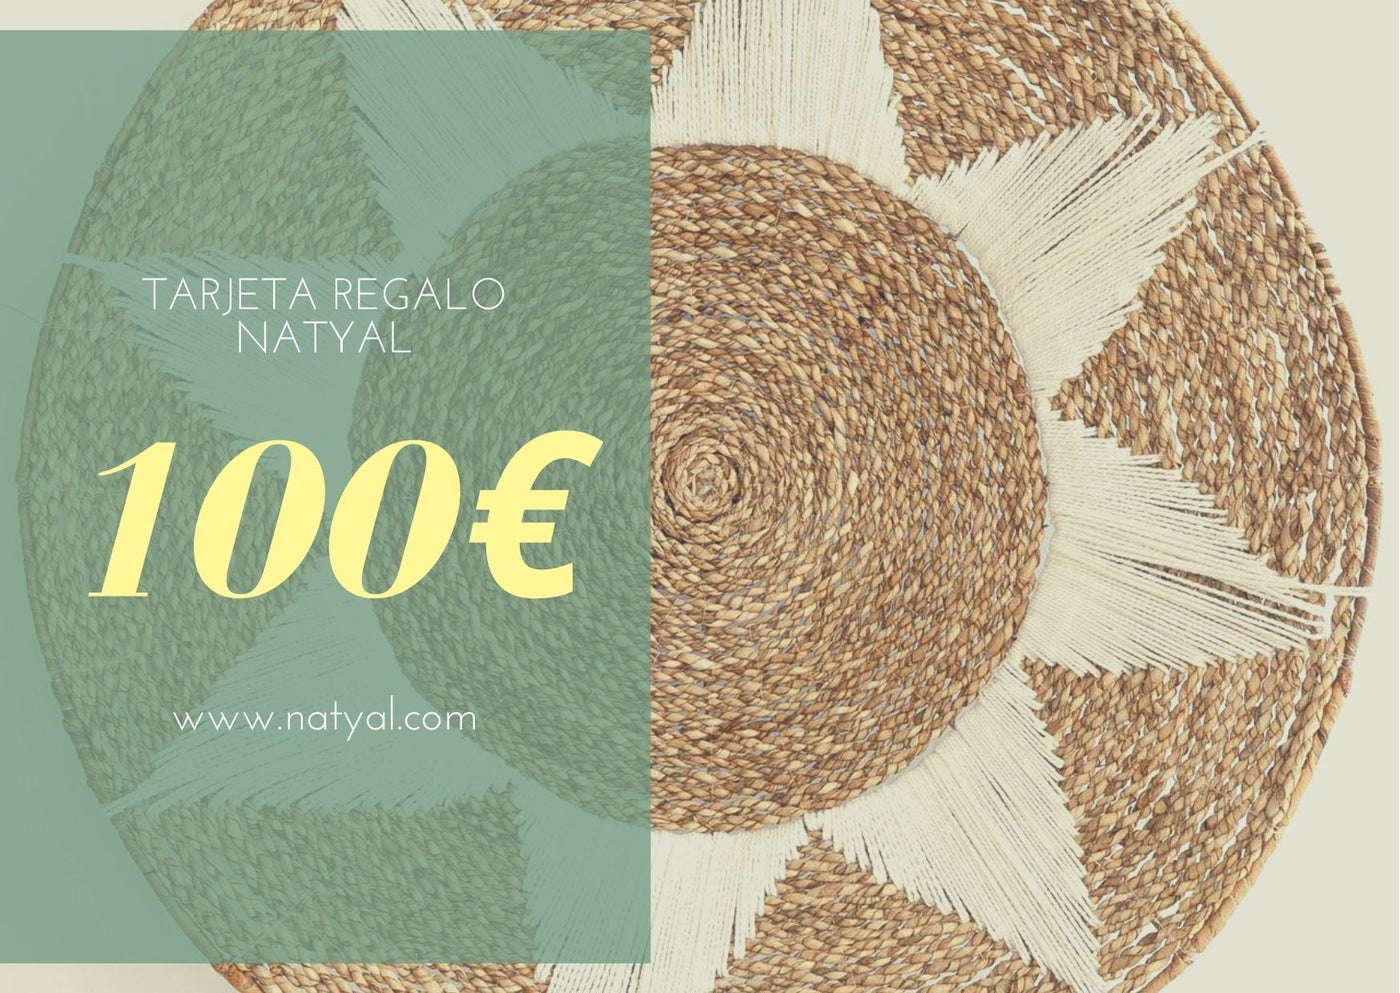 NATYAL €100 gift card